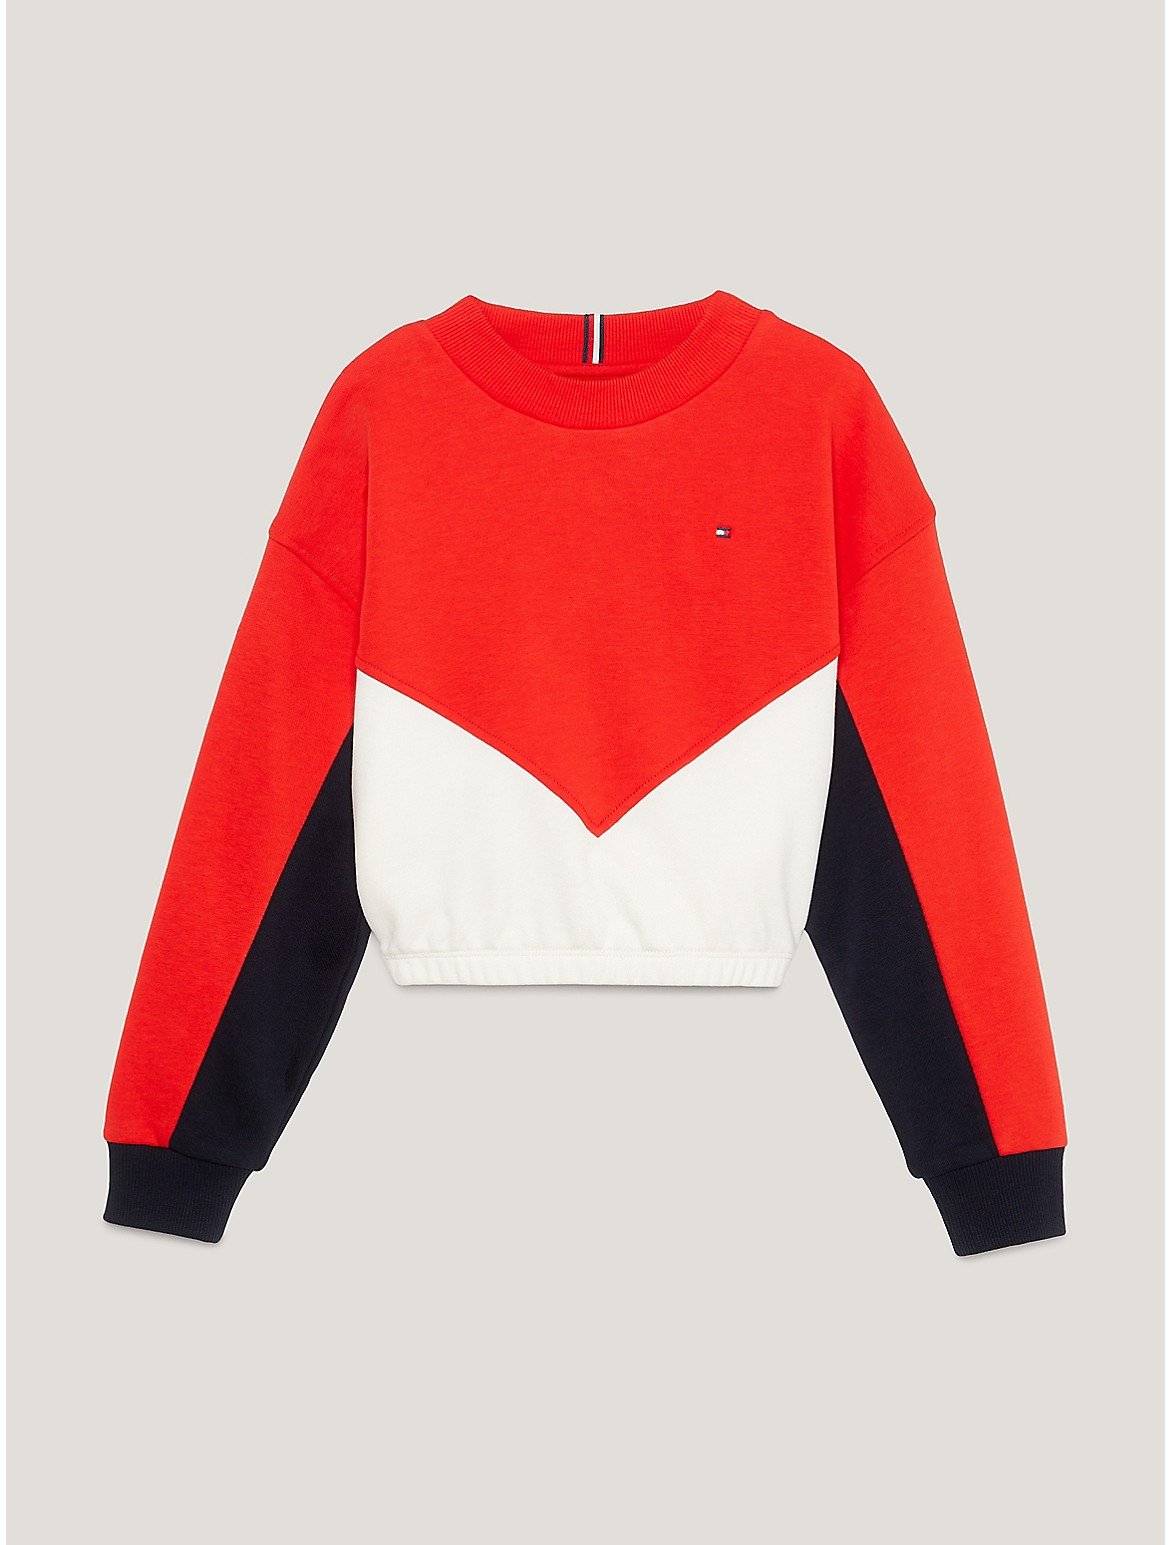 Tommy Hilfiger Girls' Kids' Colorblock Sweatshirt